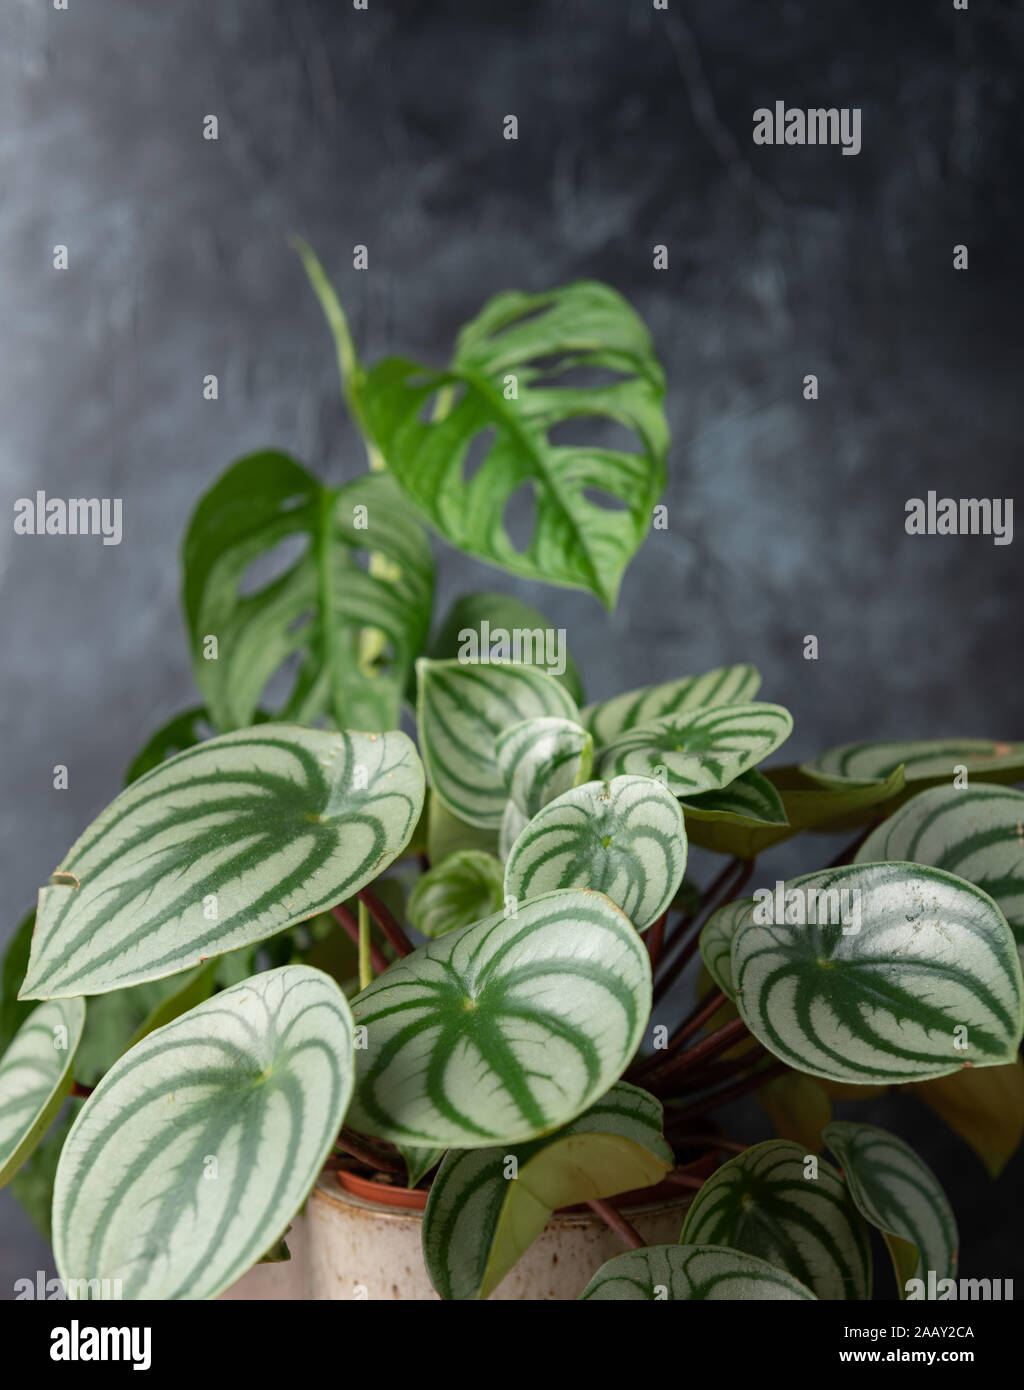 Rare Tropical Plants Arrangement In An Interior Stock Photo